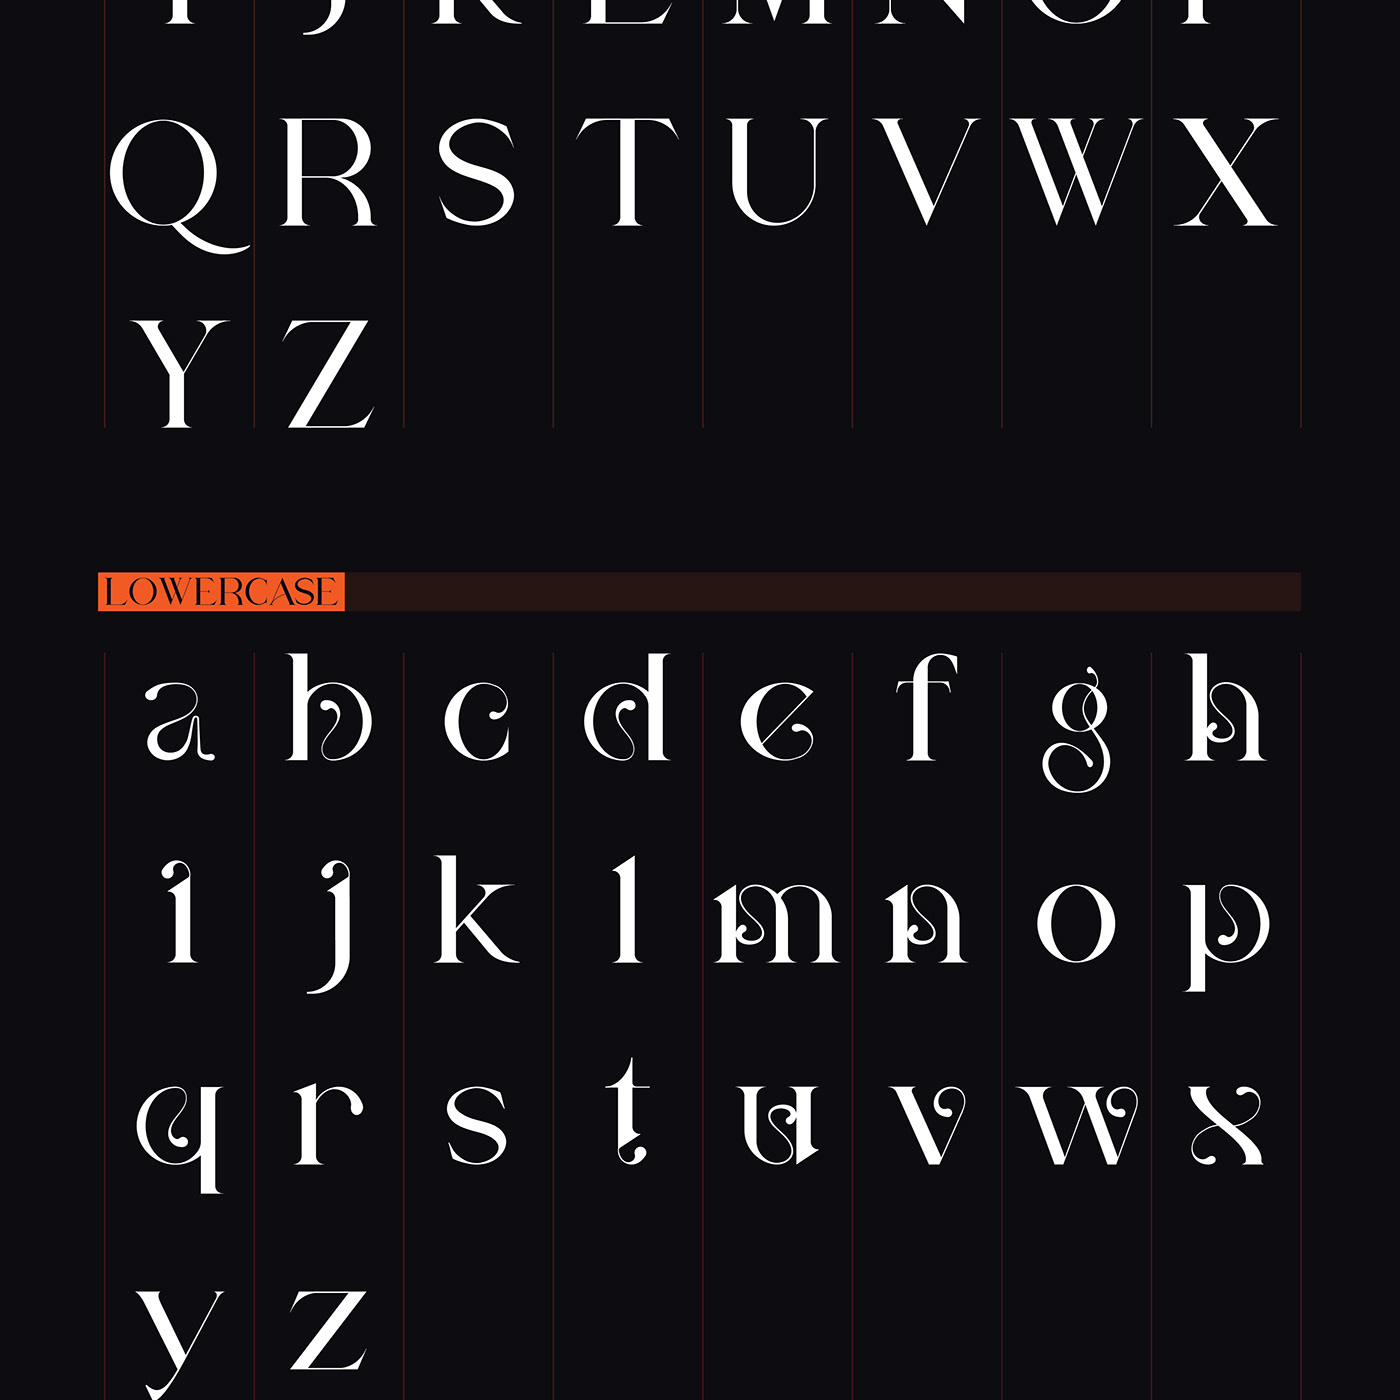 font design Typeface typeface design lettering type typography   font modern serif Verdigo